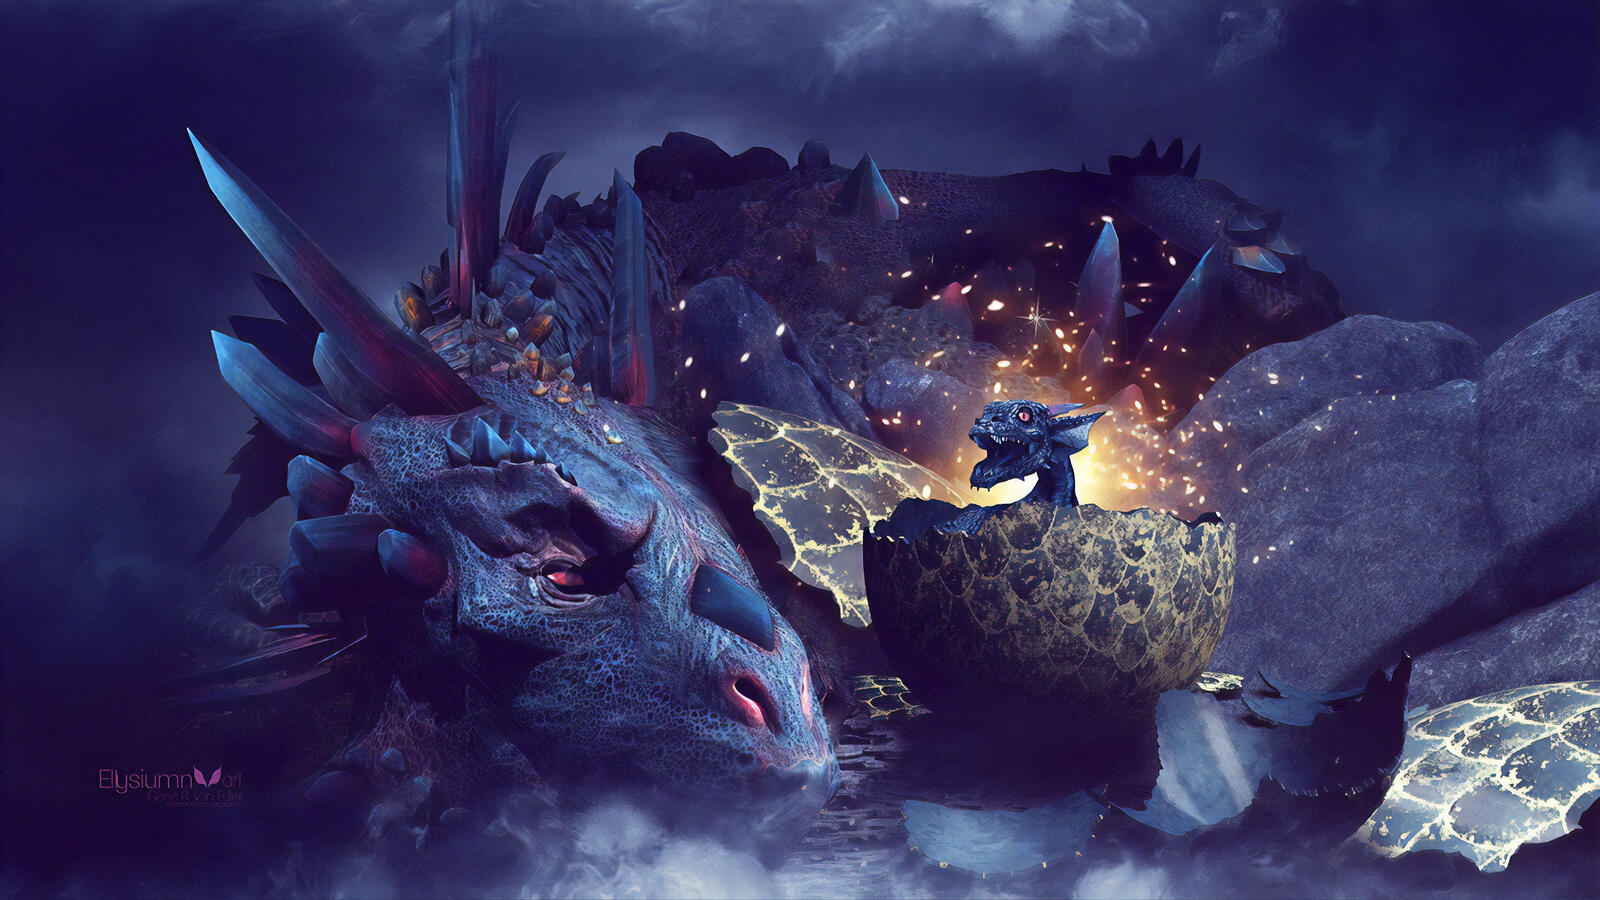 Wallpapers dragon artwork movies on the desktop